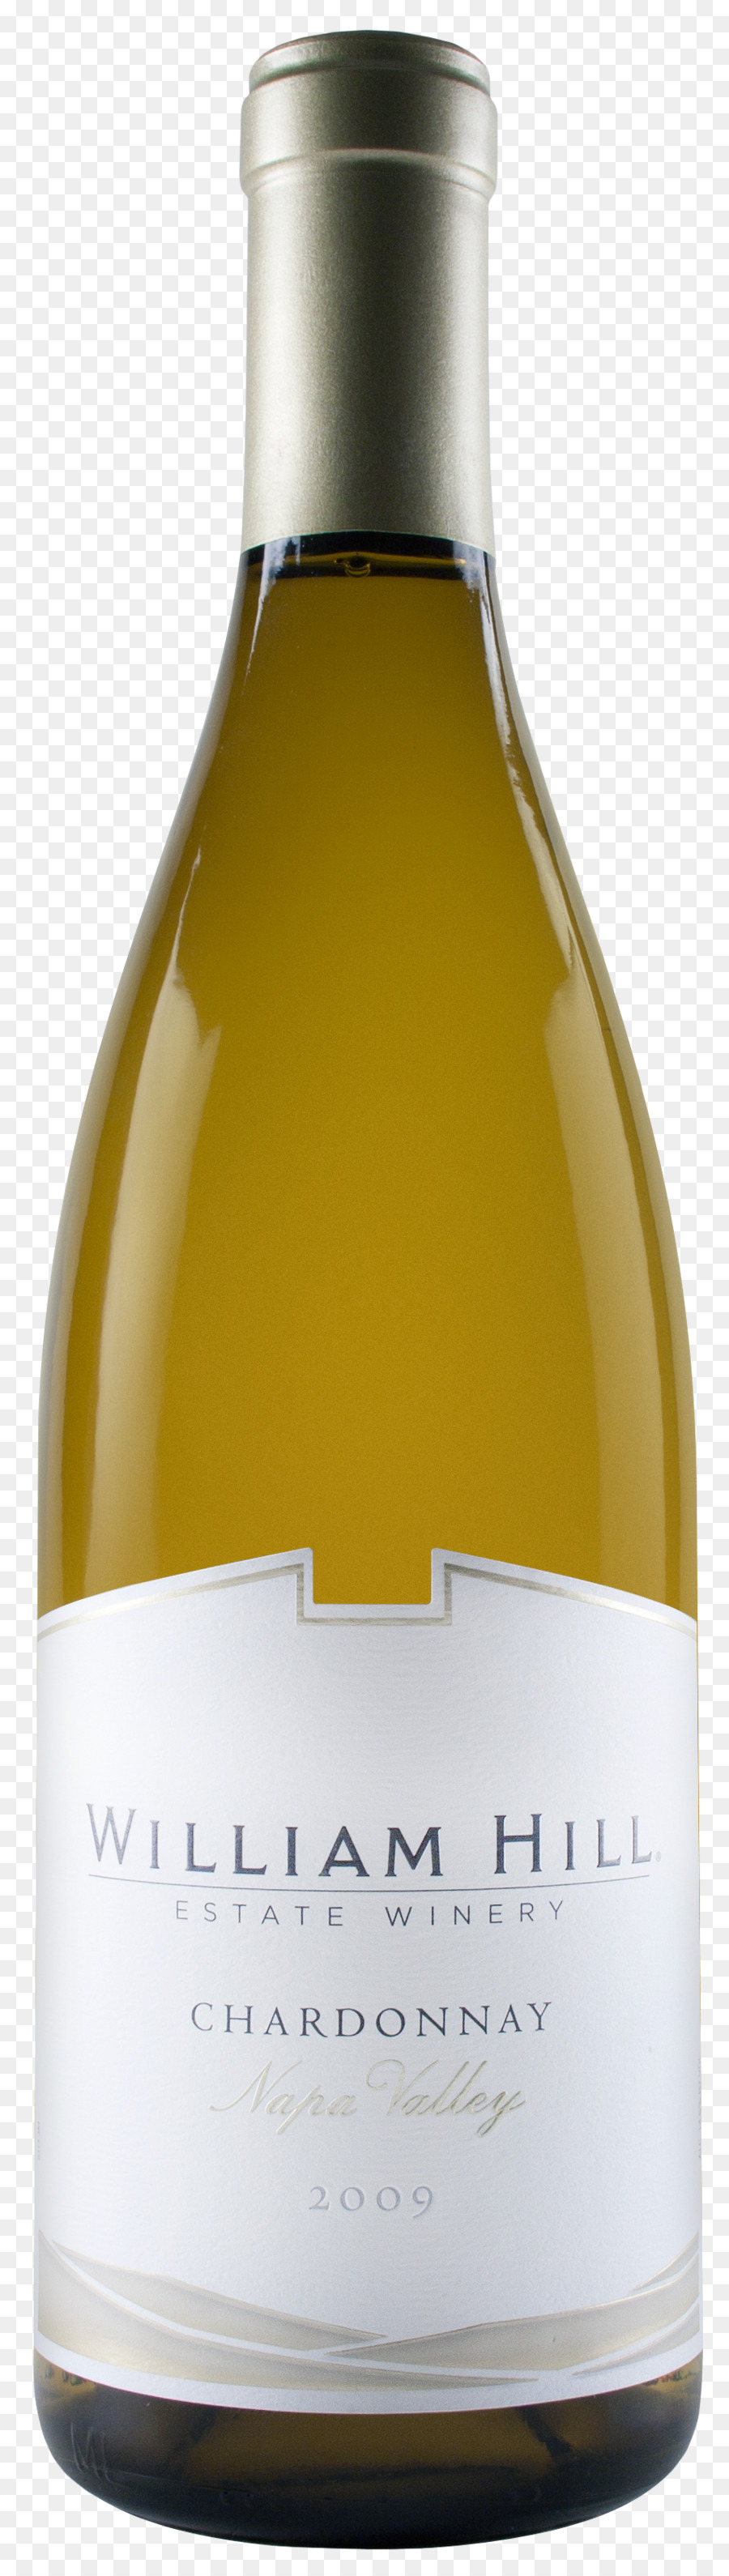 Vino bianco Chablis regione del vino Comune vino Chardonnay - vino